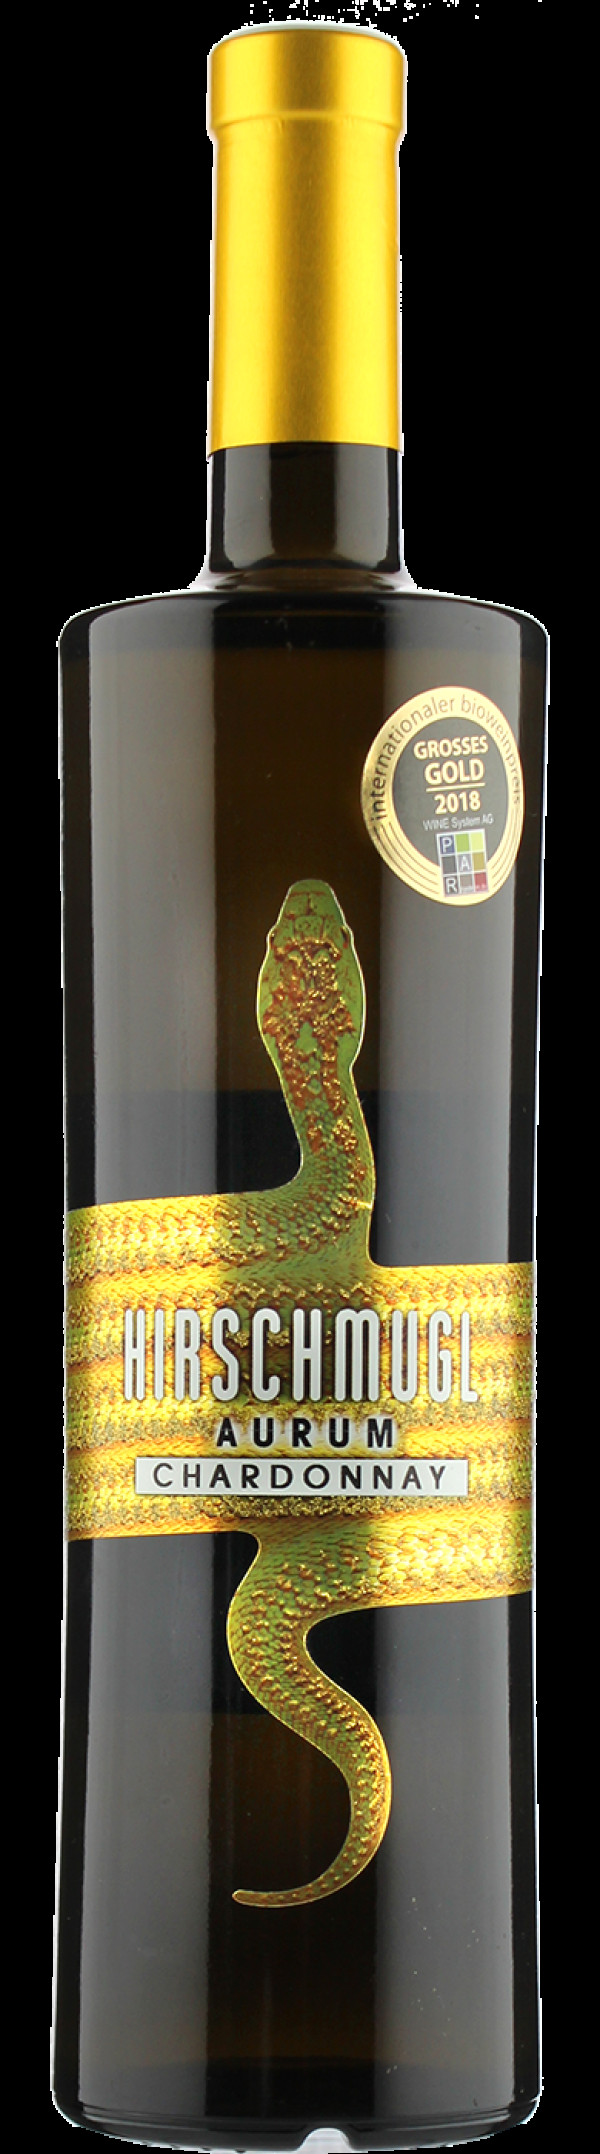 Chardonnay Aurum 2013 